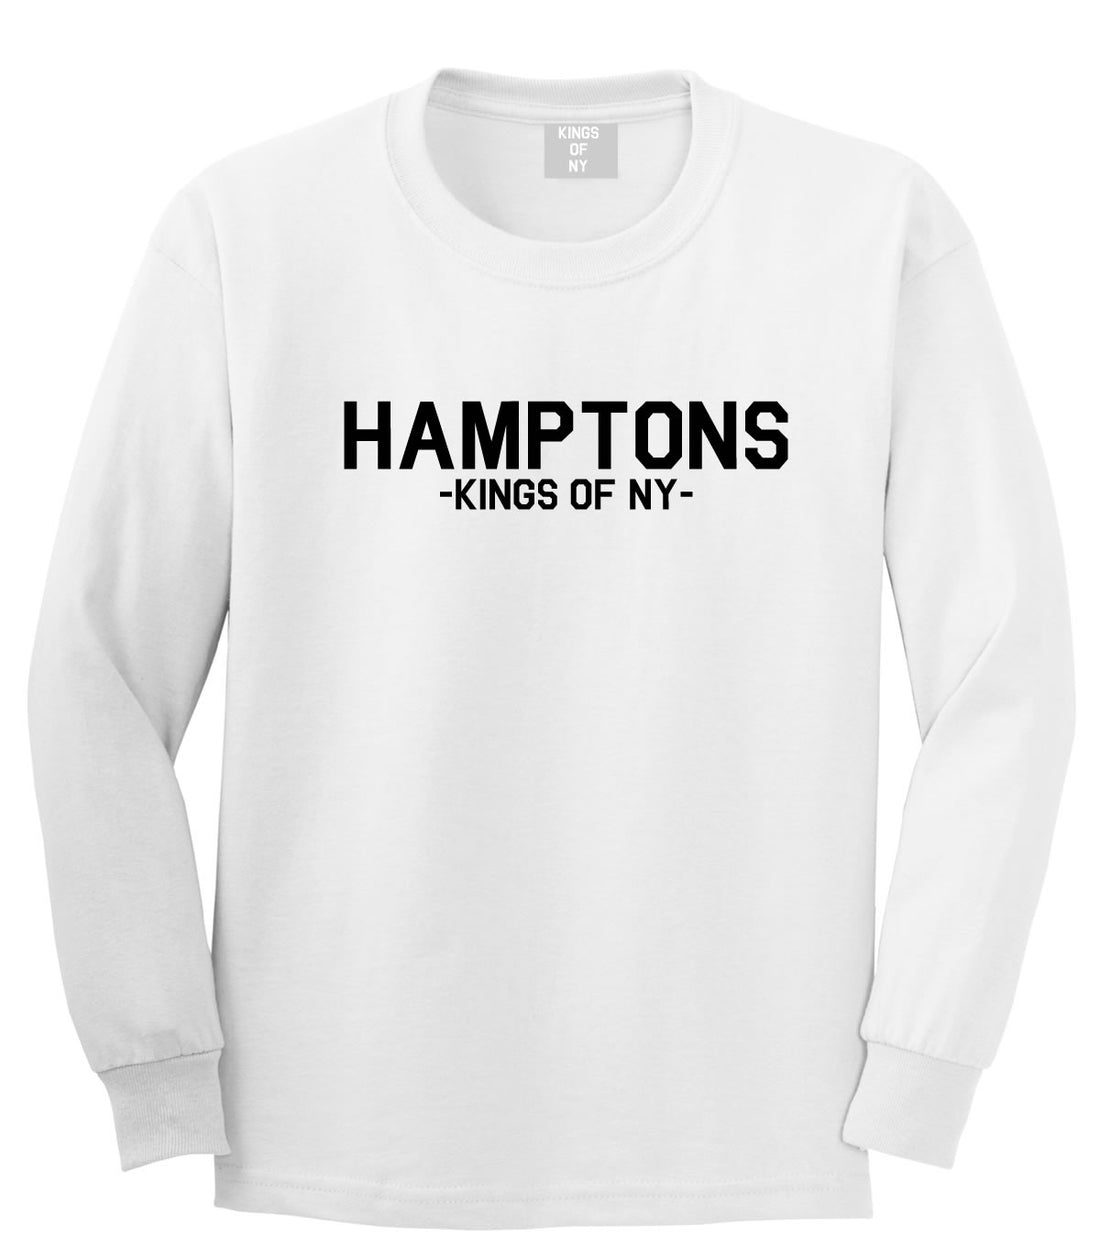 Hamptons New York Long Sleeve T-Shirt in White